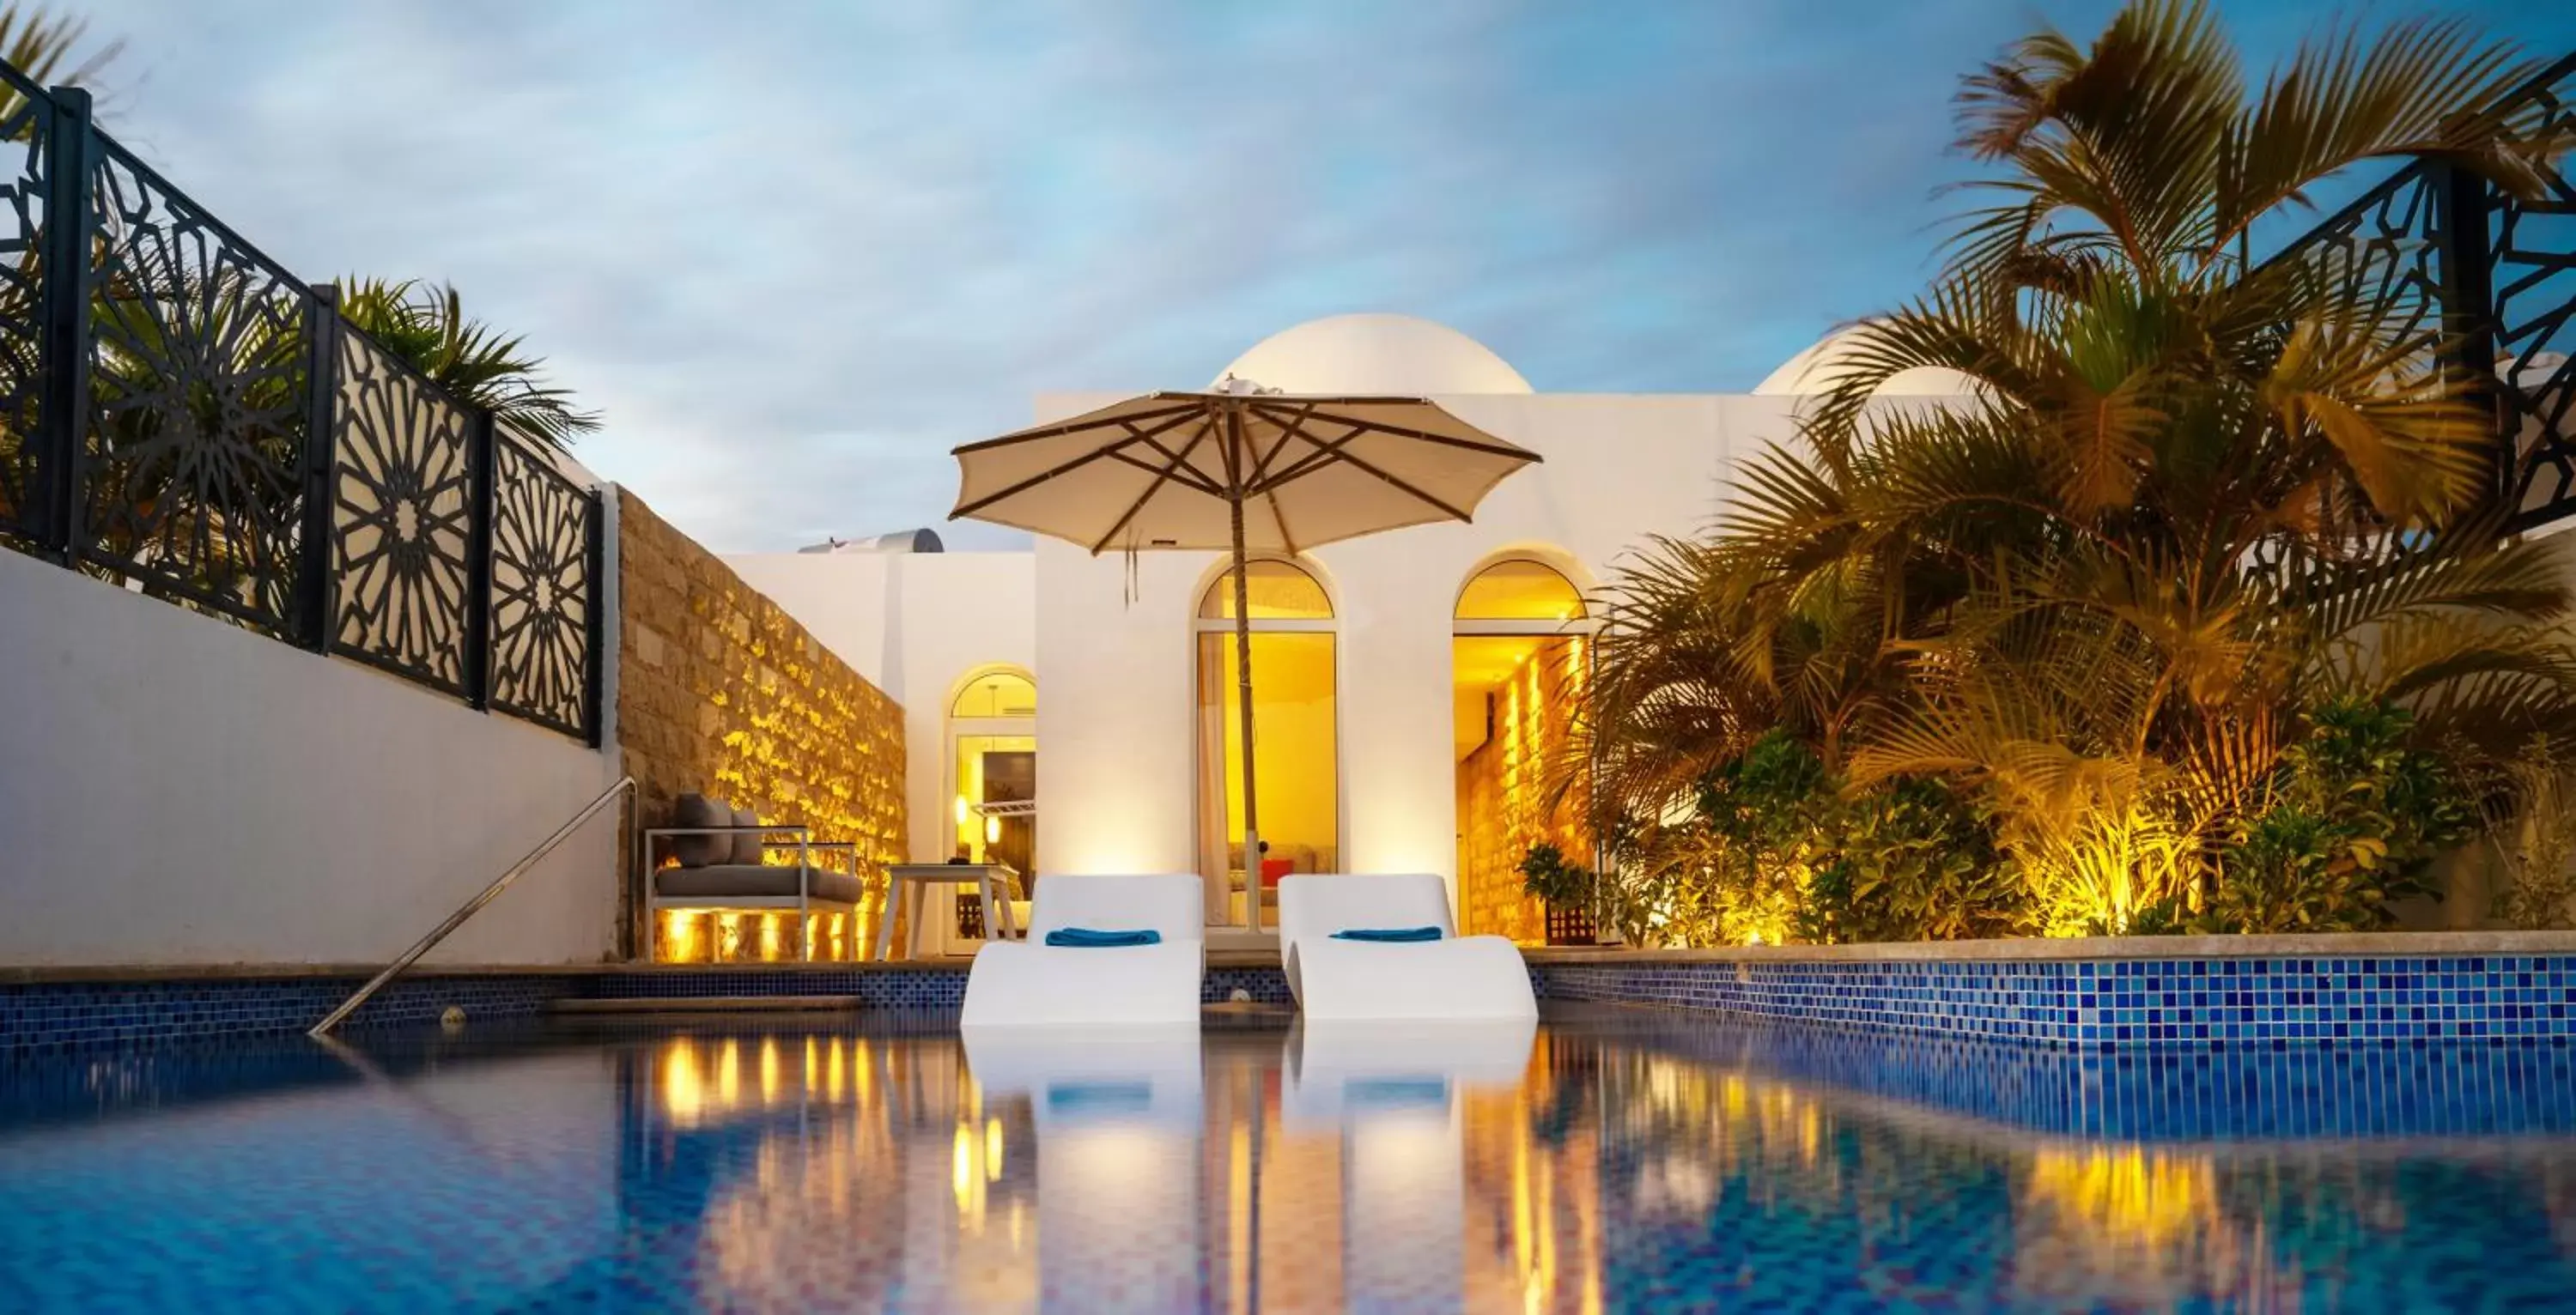 Pool view in Fort Arabesque Resort, Spa & Villas